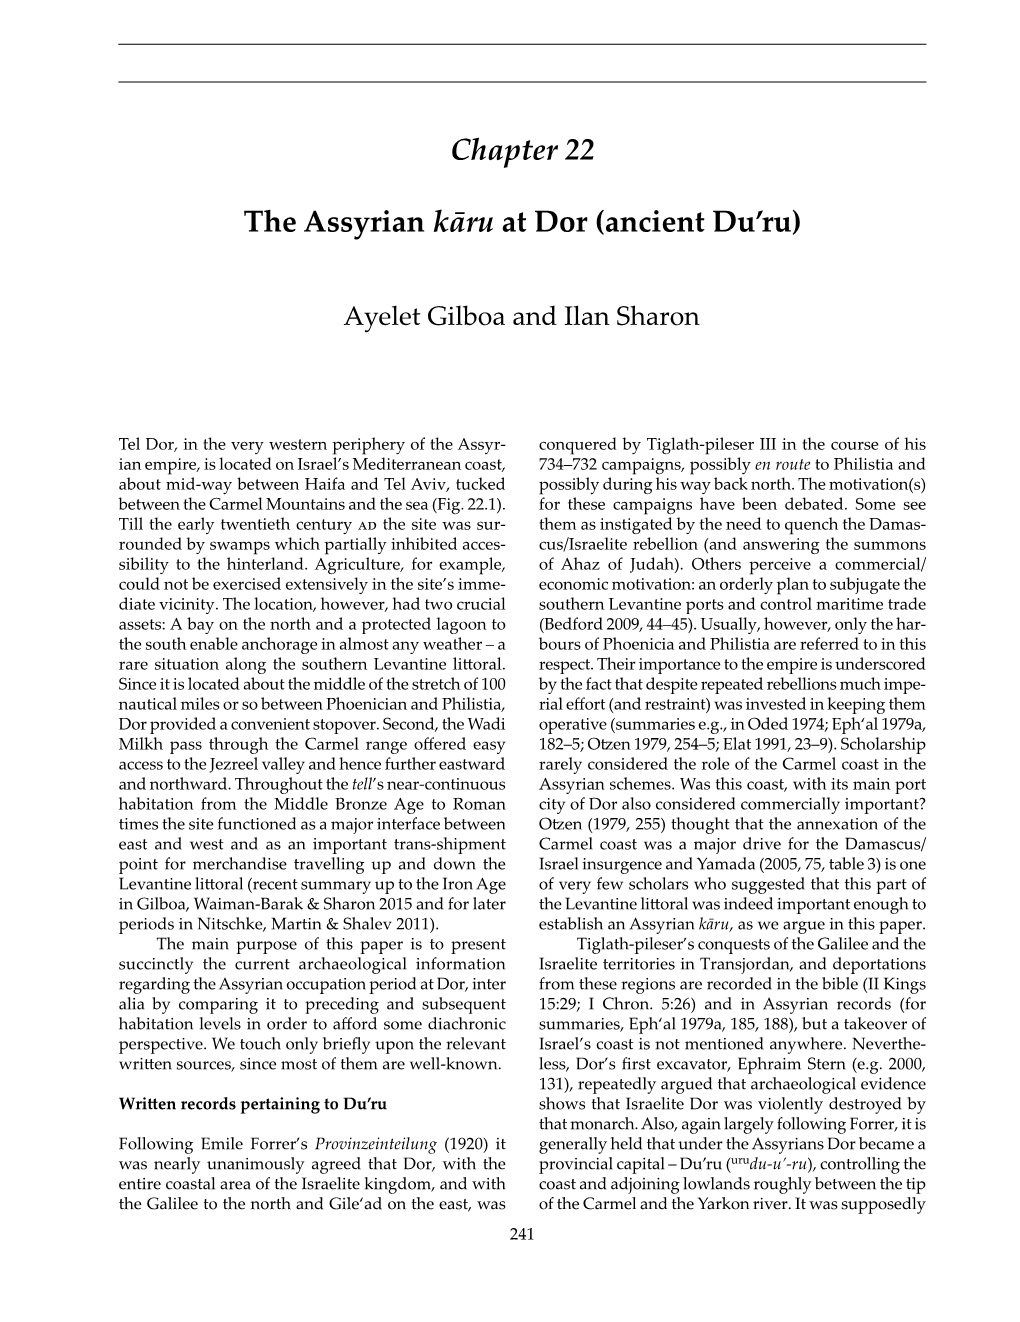 Chapter 22 the Assyrian Kāru at Dor (Ancient Du'ru)